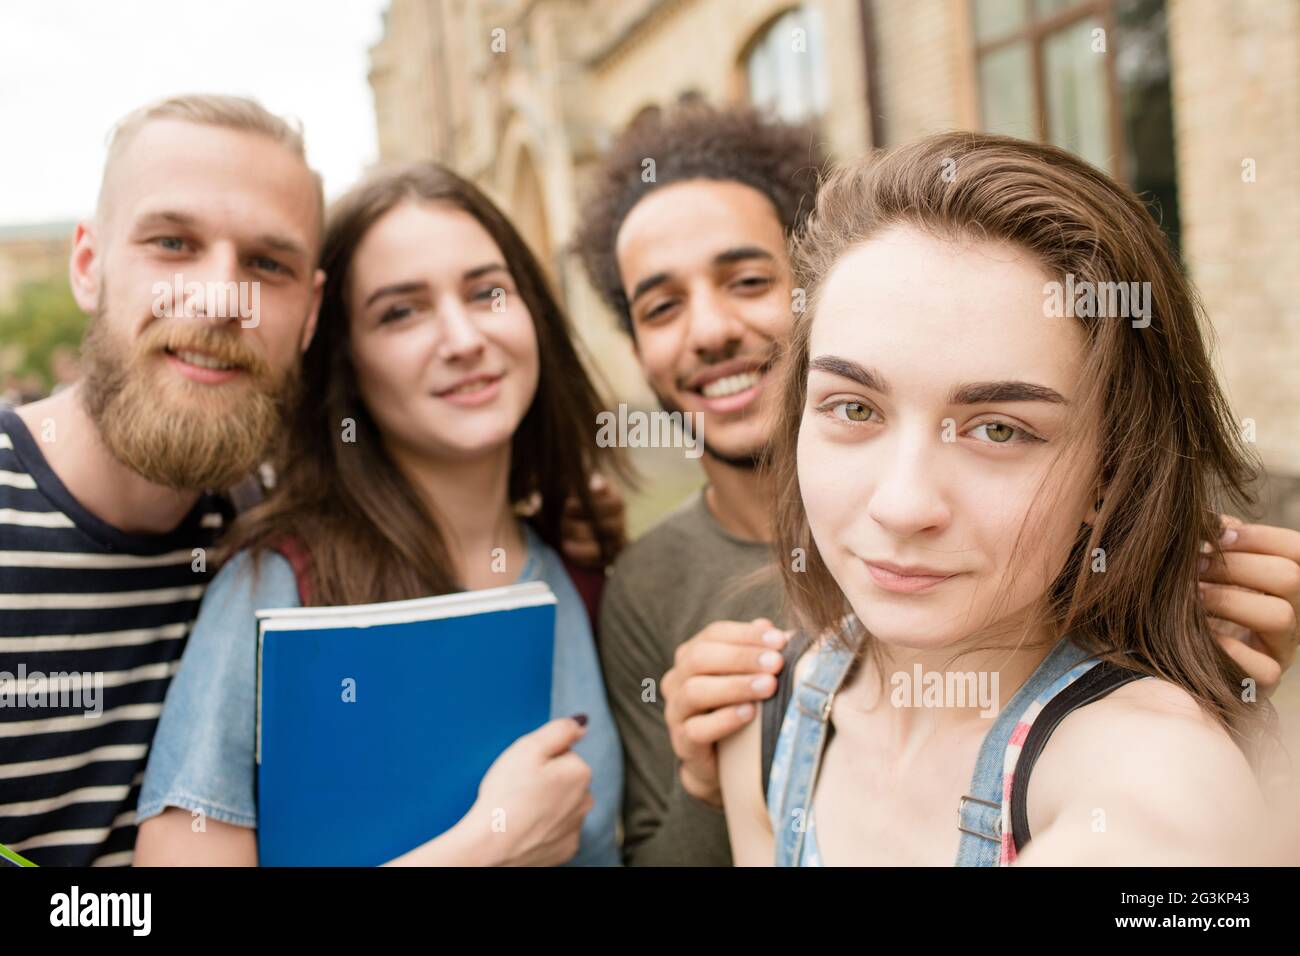 Multiethnic students smiling for selfie photo. Stock Photo